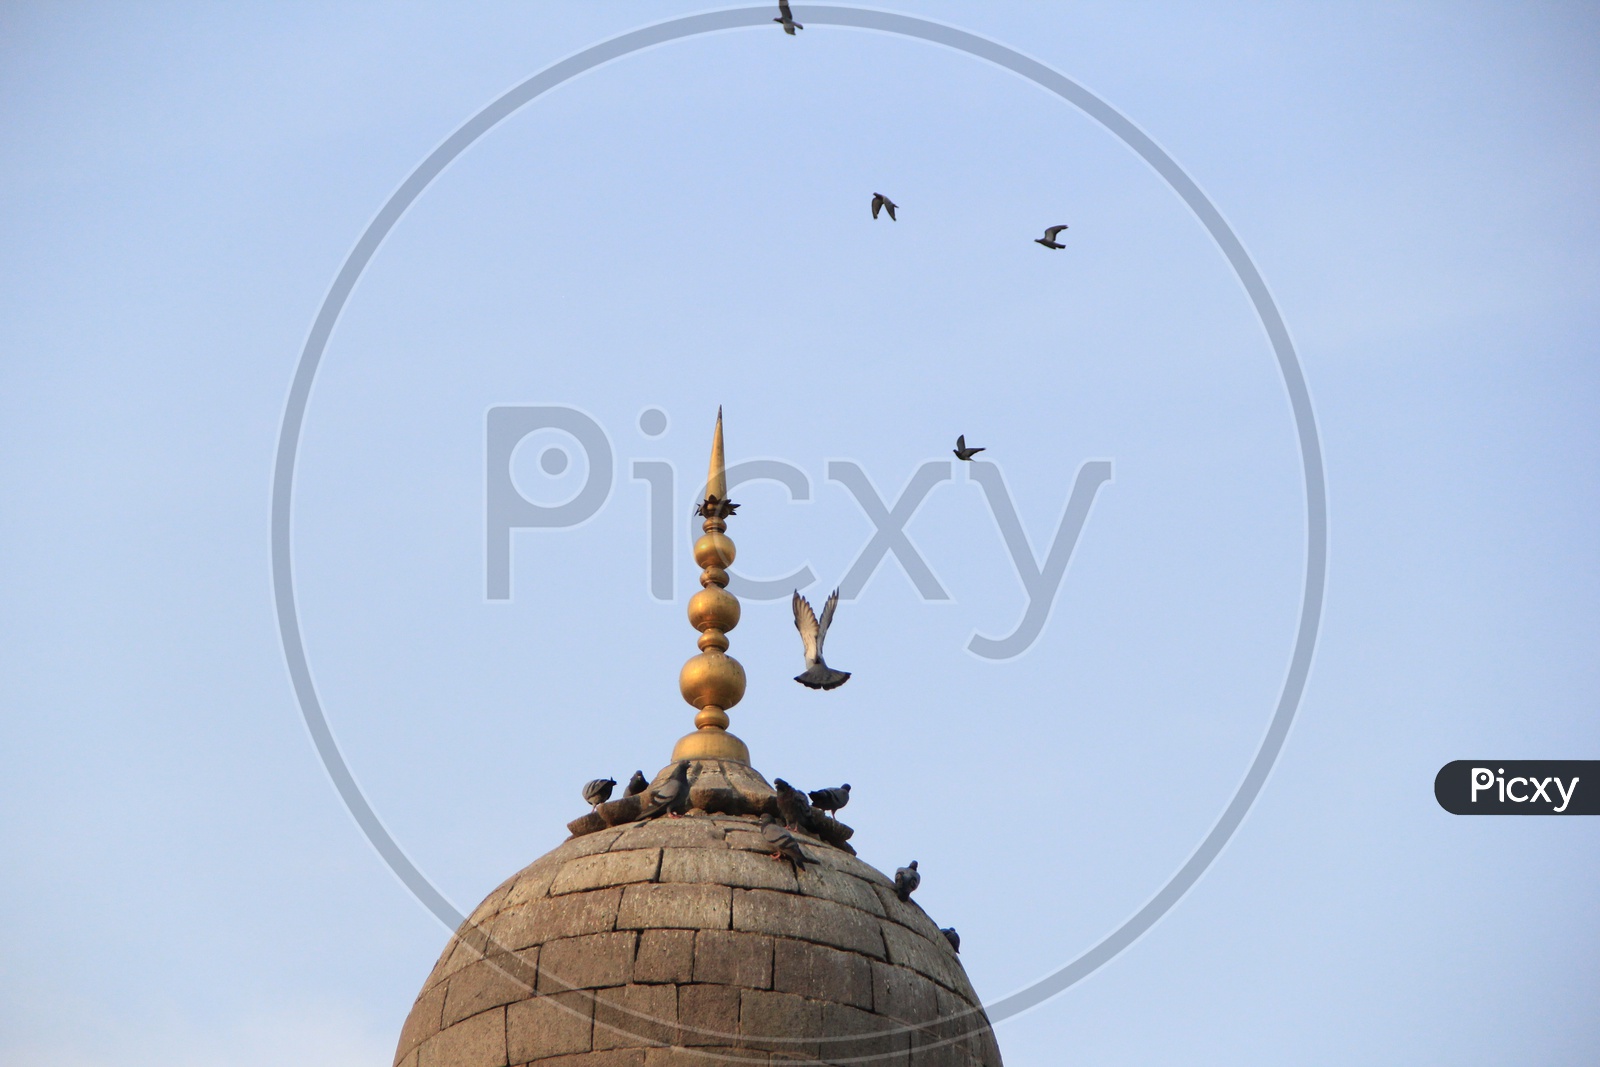 Pigeons On The Minar of Mecca masjid